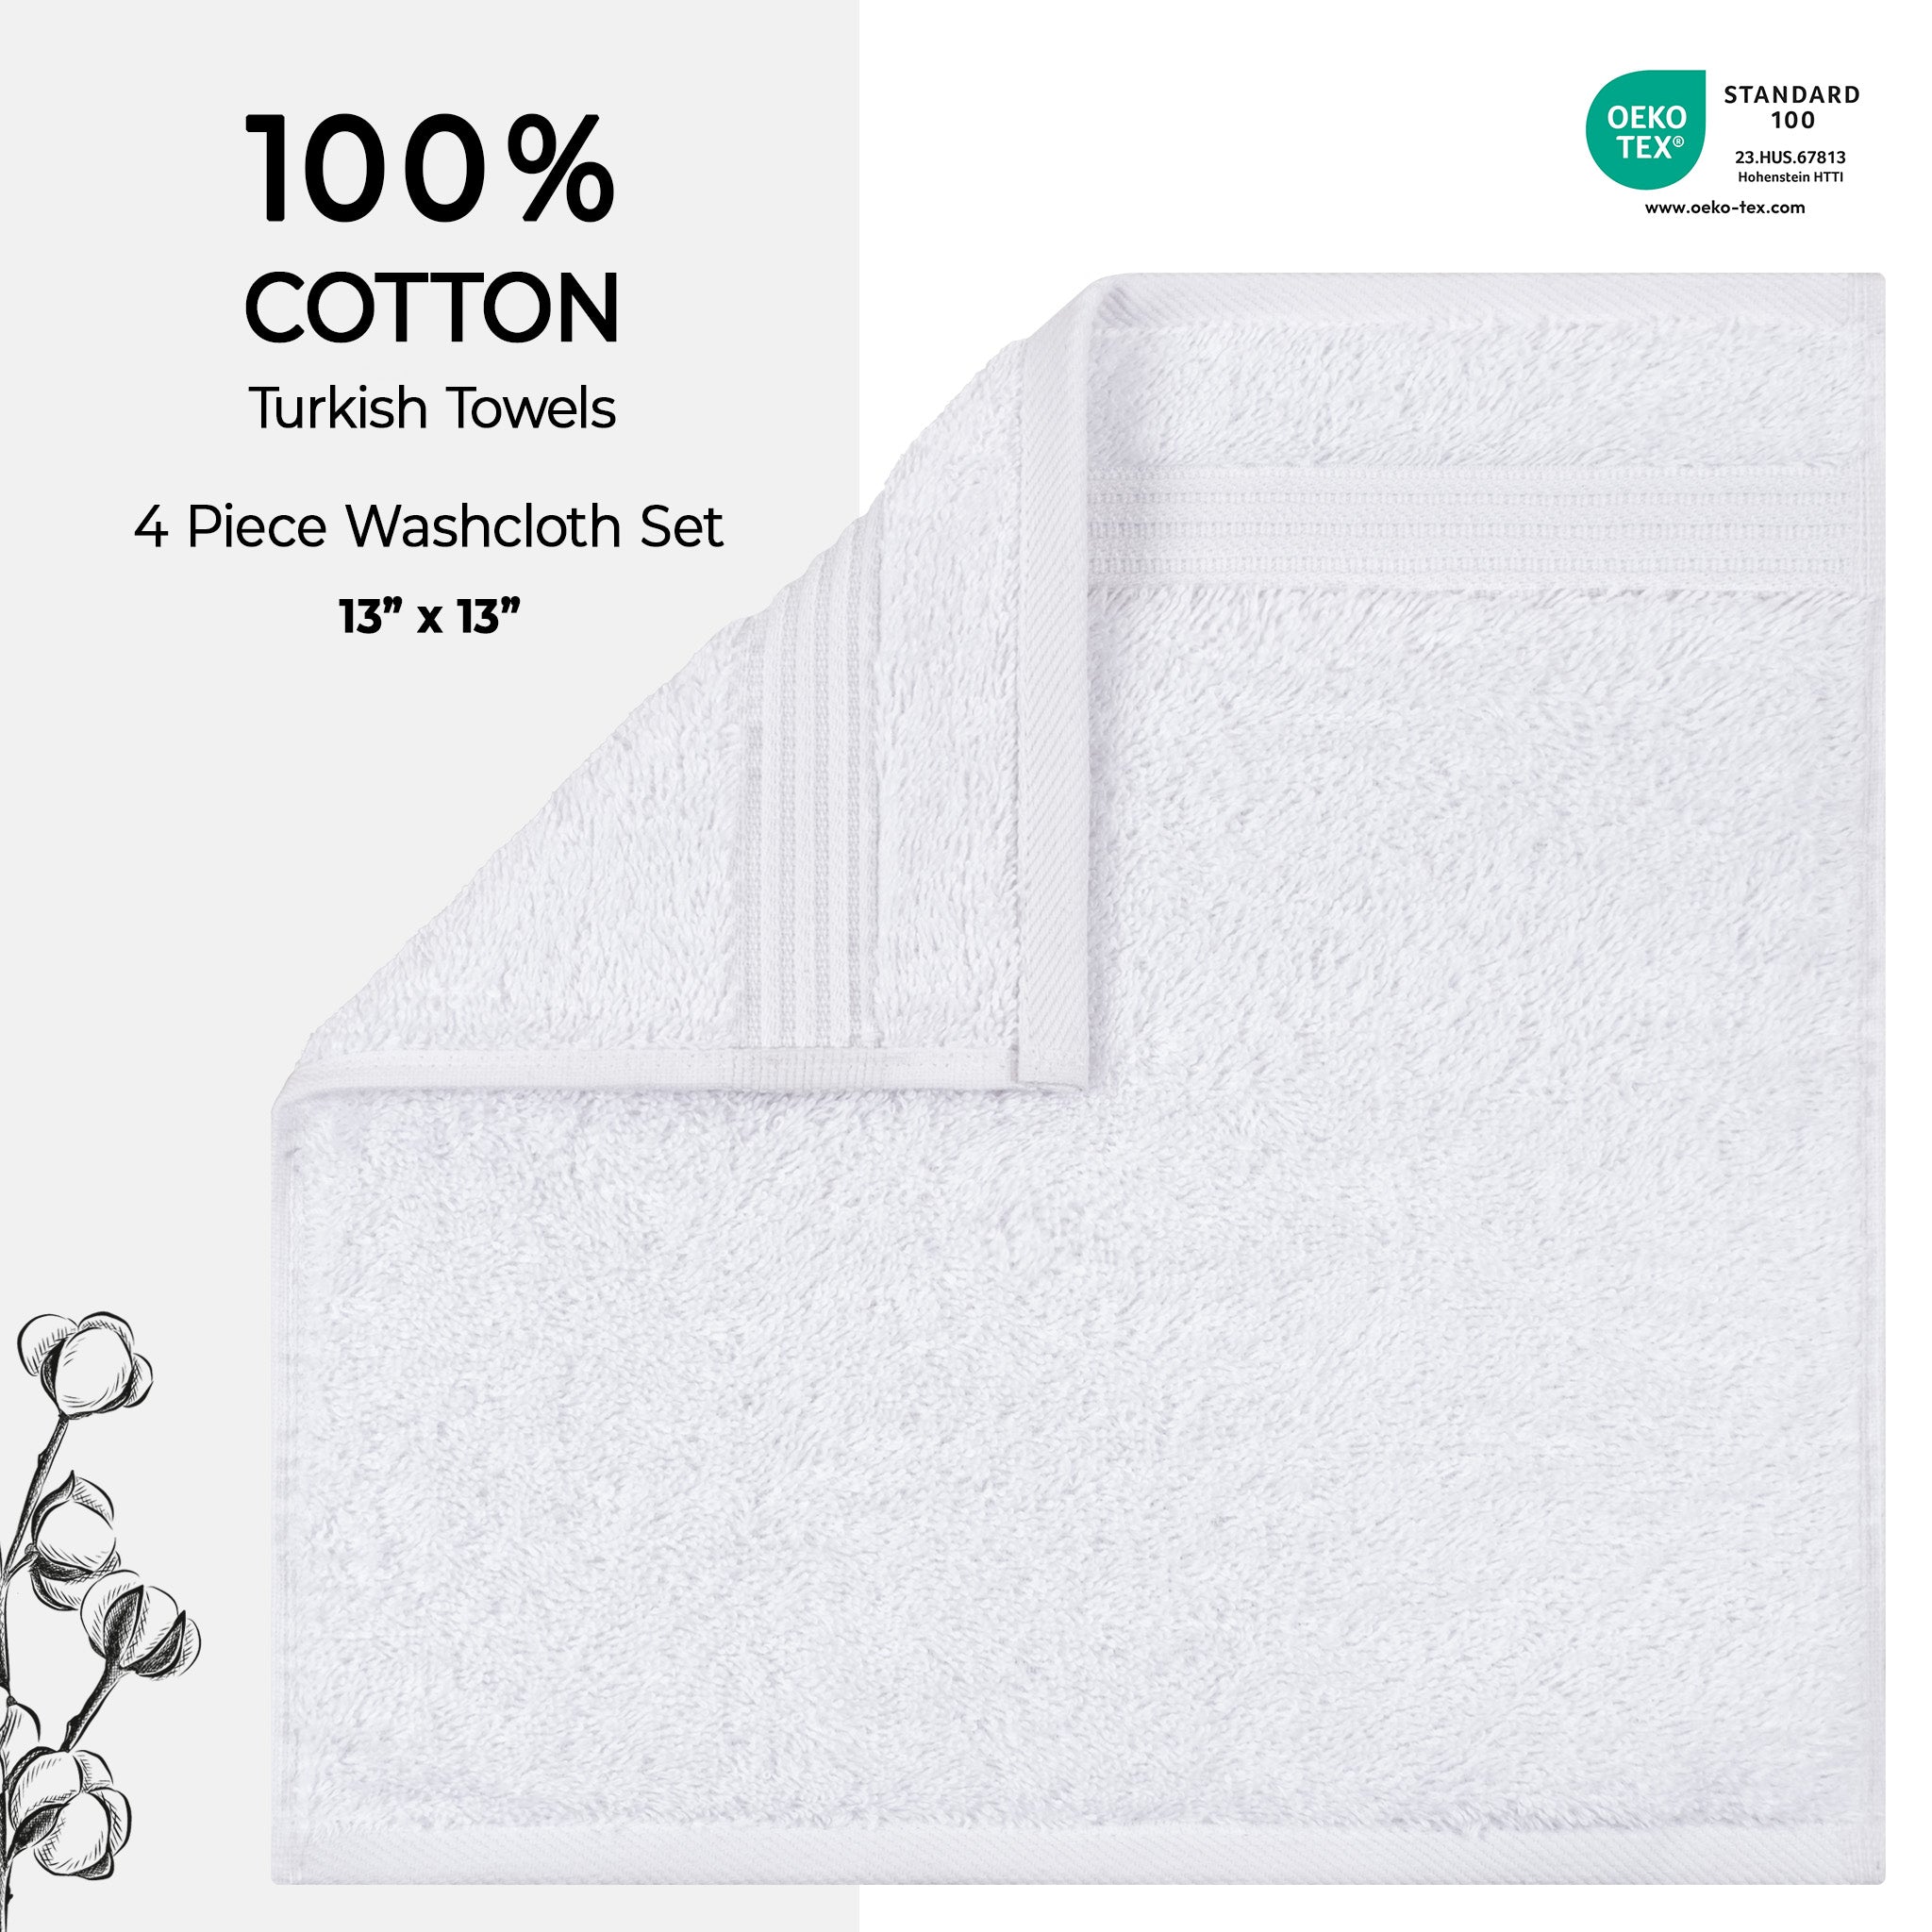 American Soft Linen Bekos 100% Cotton Turkish Towels, 4 Piece Washcloth Towel Set -white-02